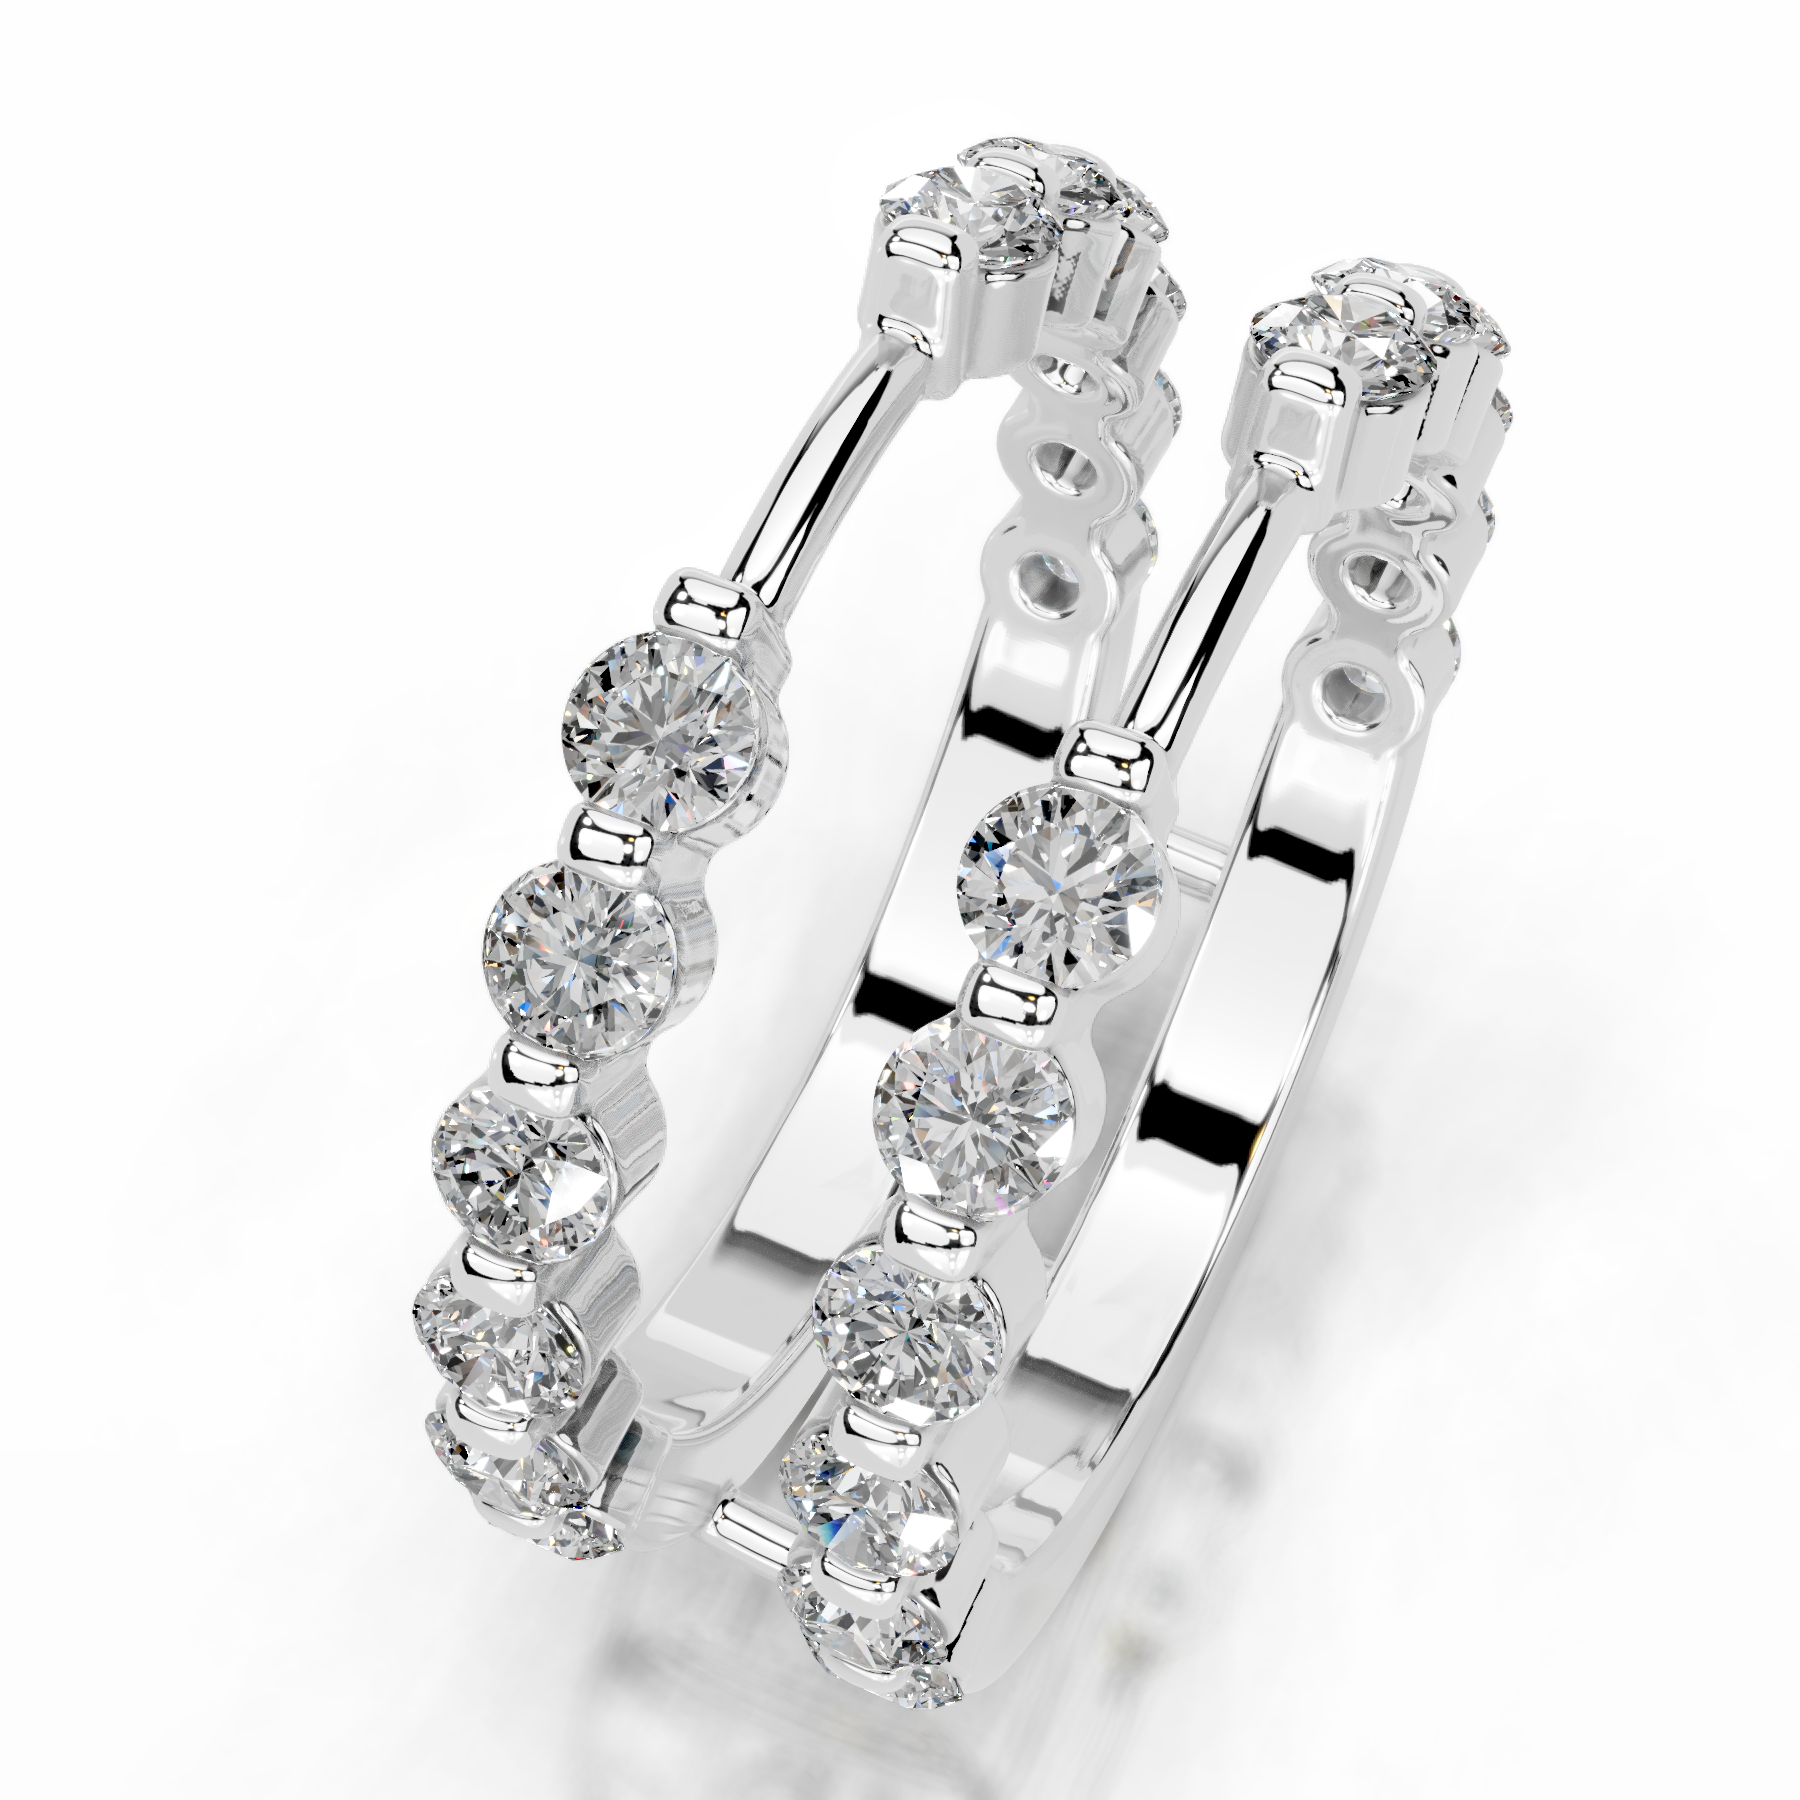 Ashley Diamond Wedding Ring   (1.25 Carat) -18K White Gold